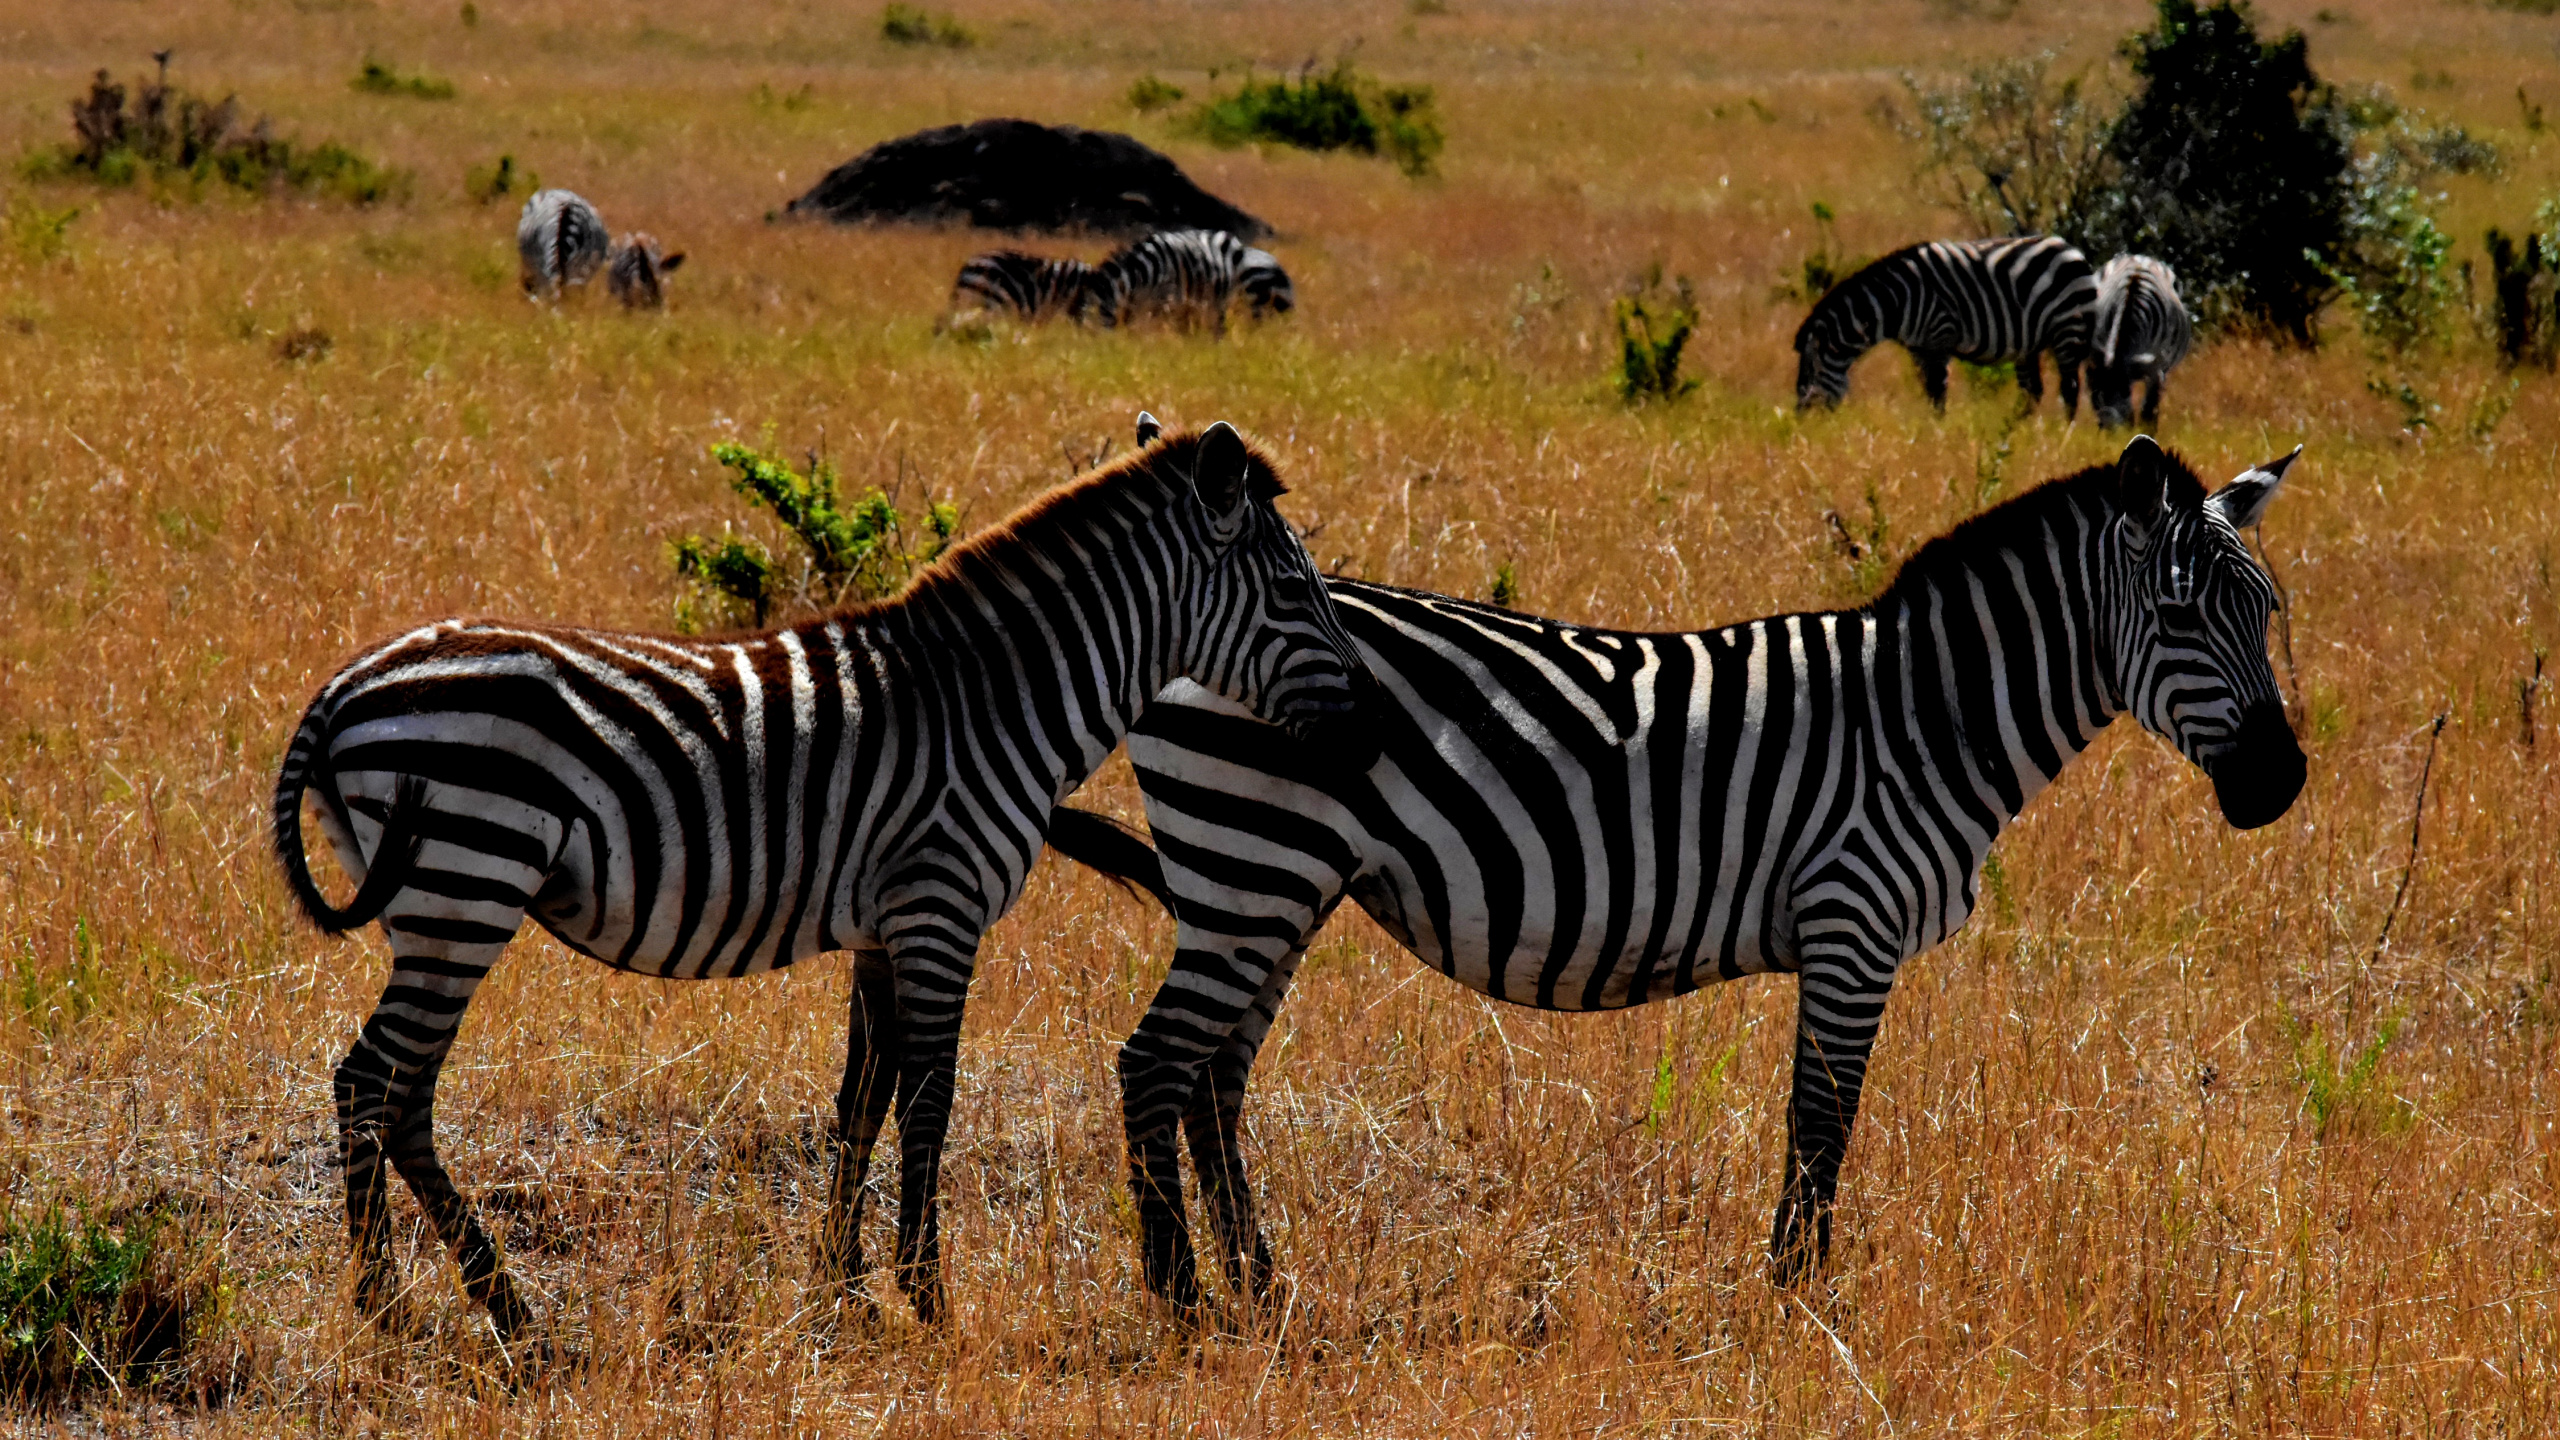 Zebra on Brown Grass Field During Daytime. Wallpaper in 2560x1440 Resolution